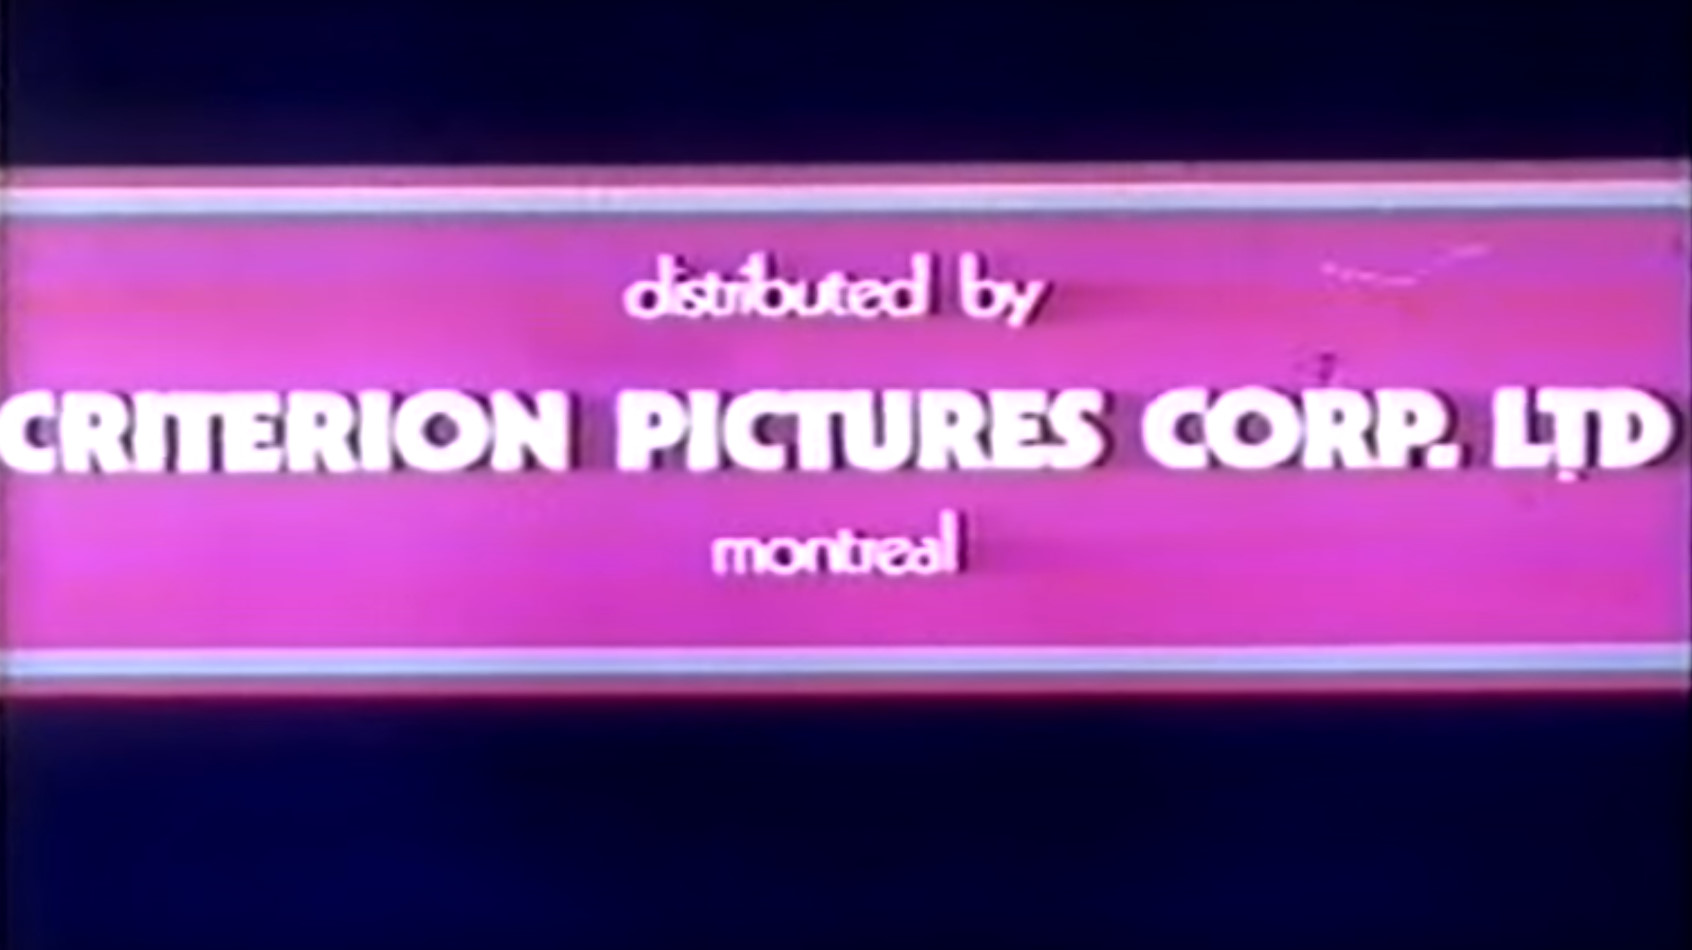 Criterion Pictures Corp, Ltd.